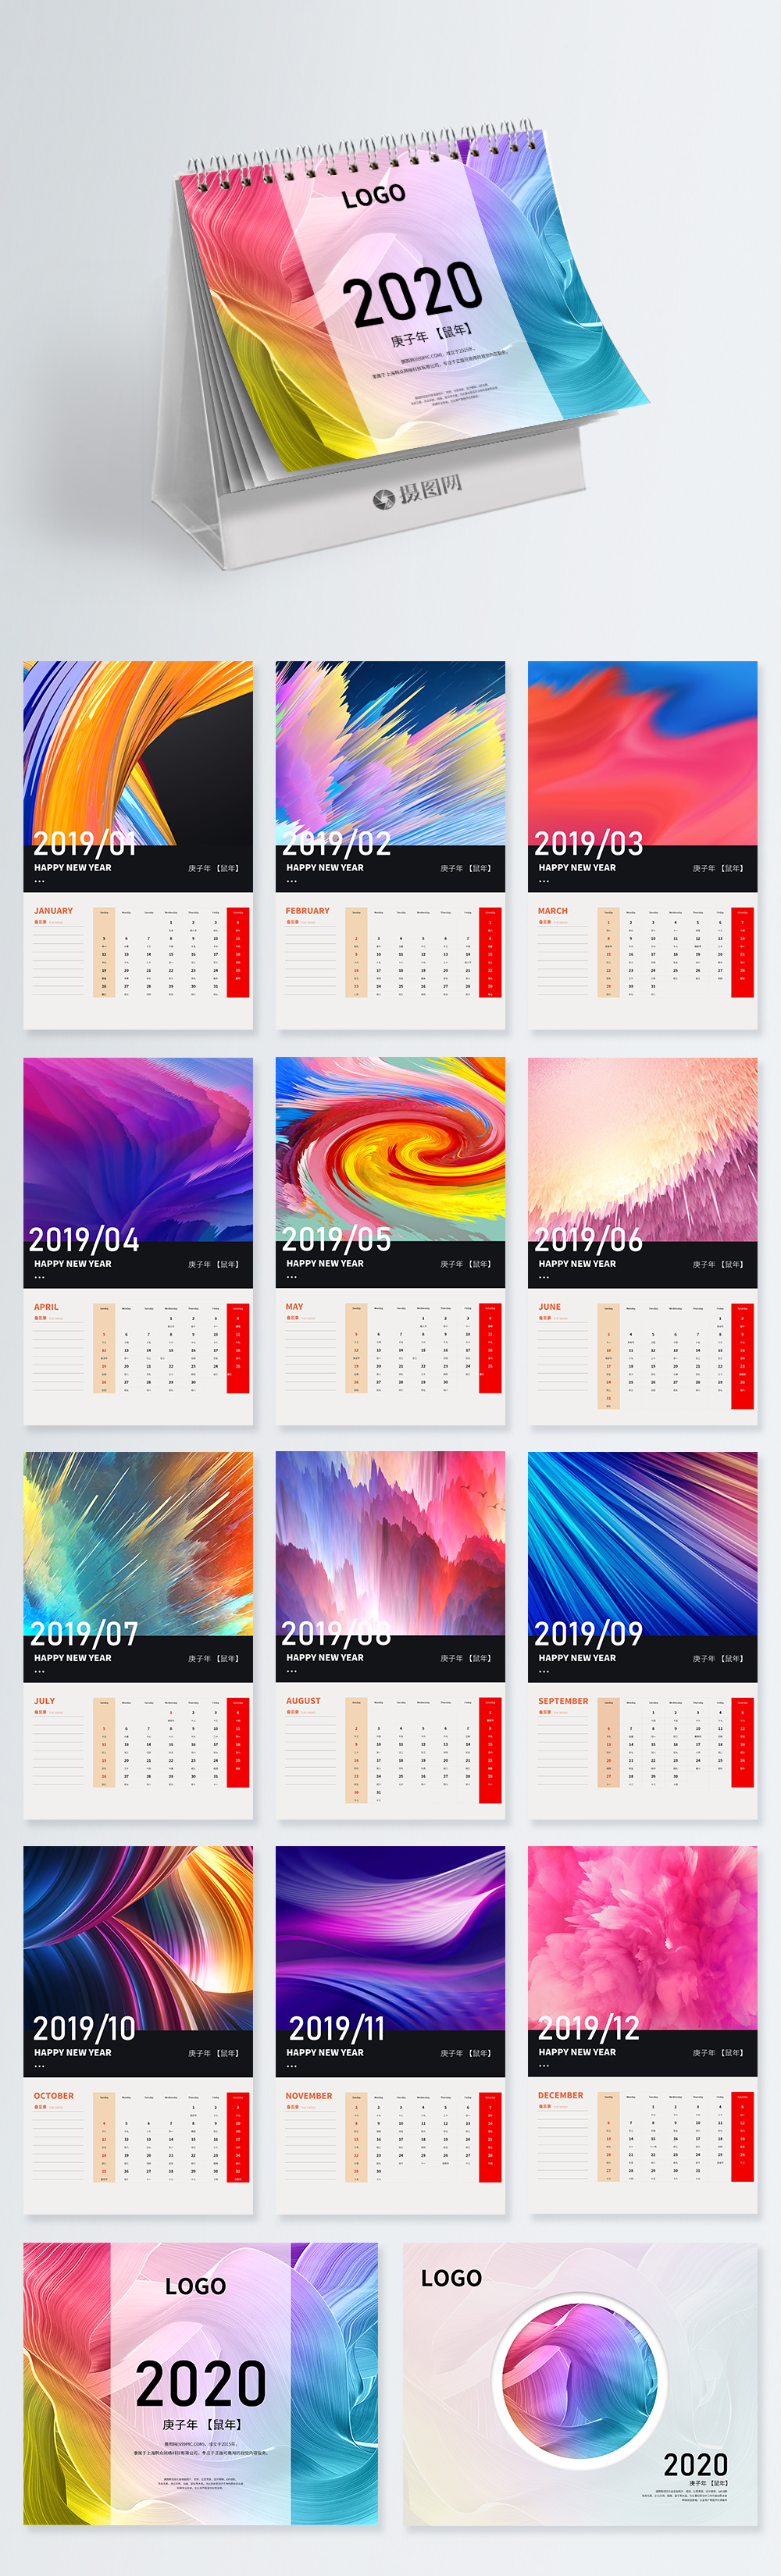 Calendar Design Template from img.lovepik.com